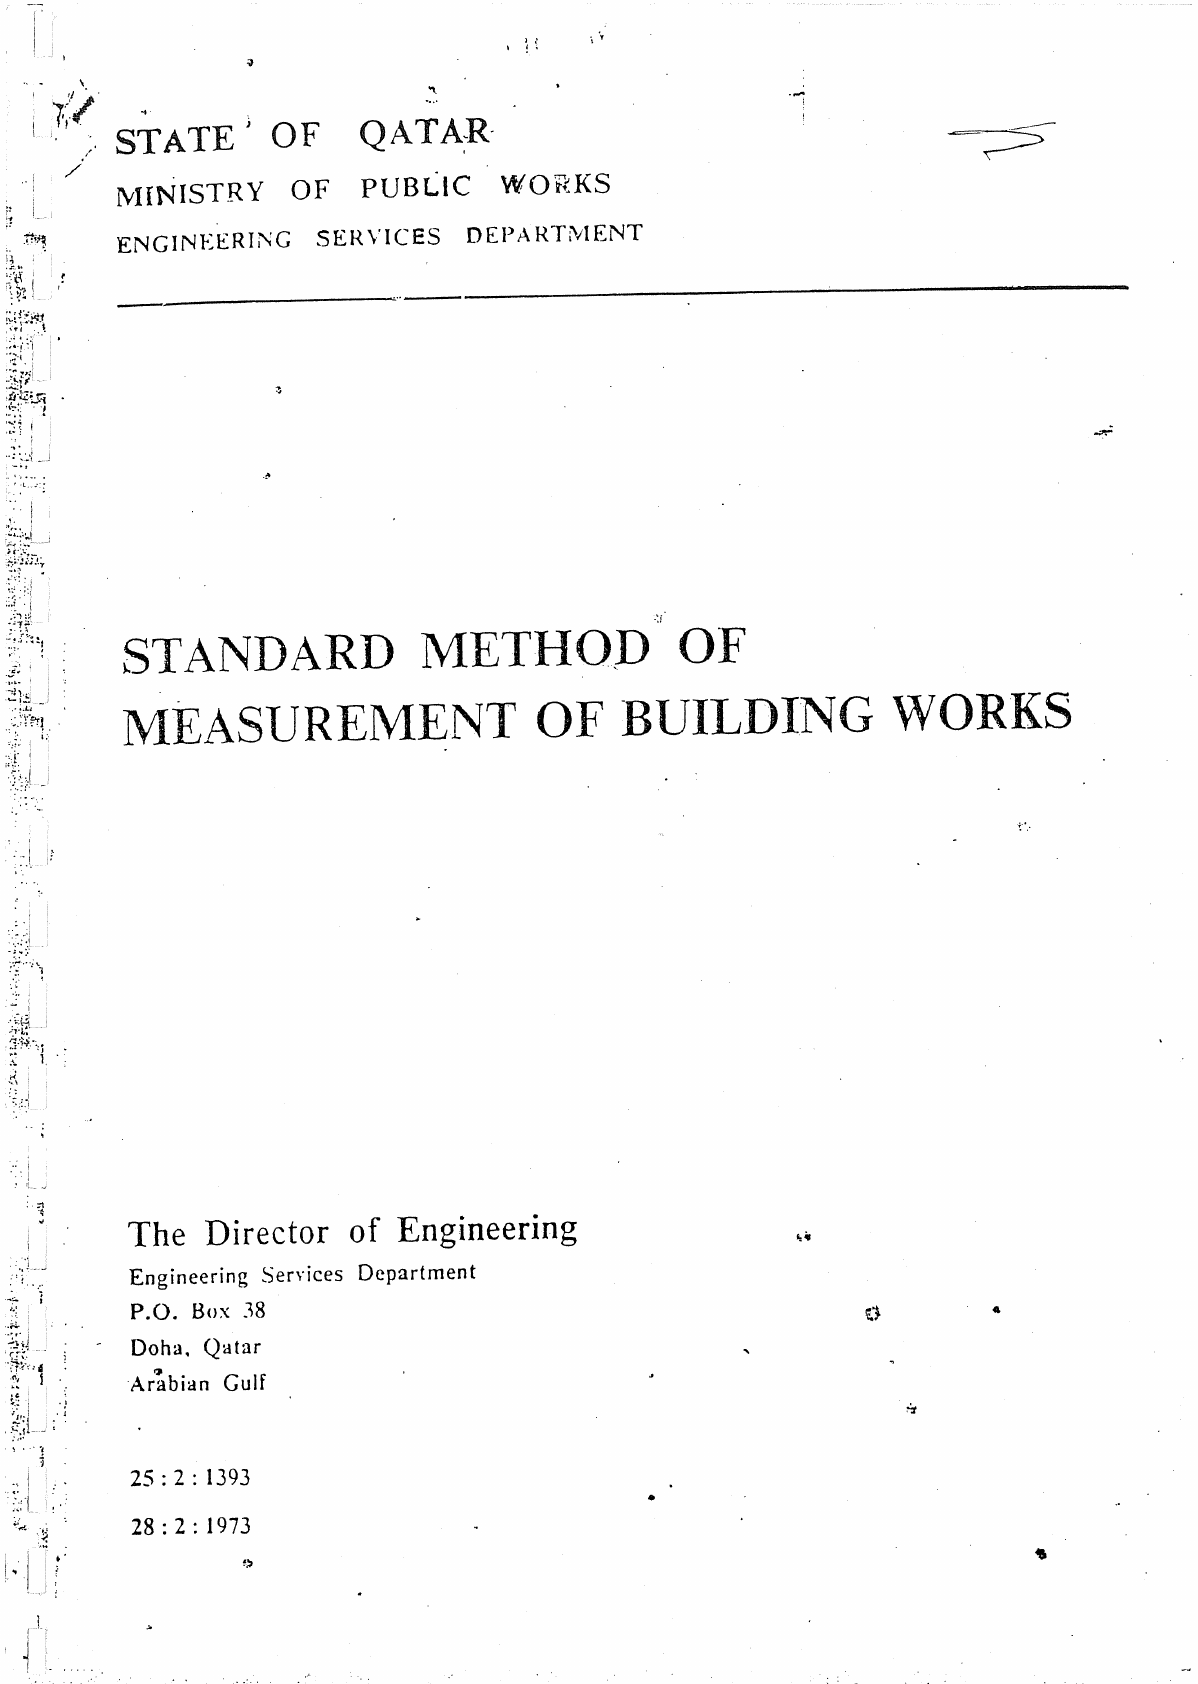 building and engineering standard method of measurement pdf